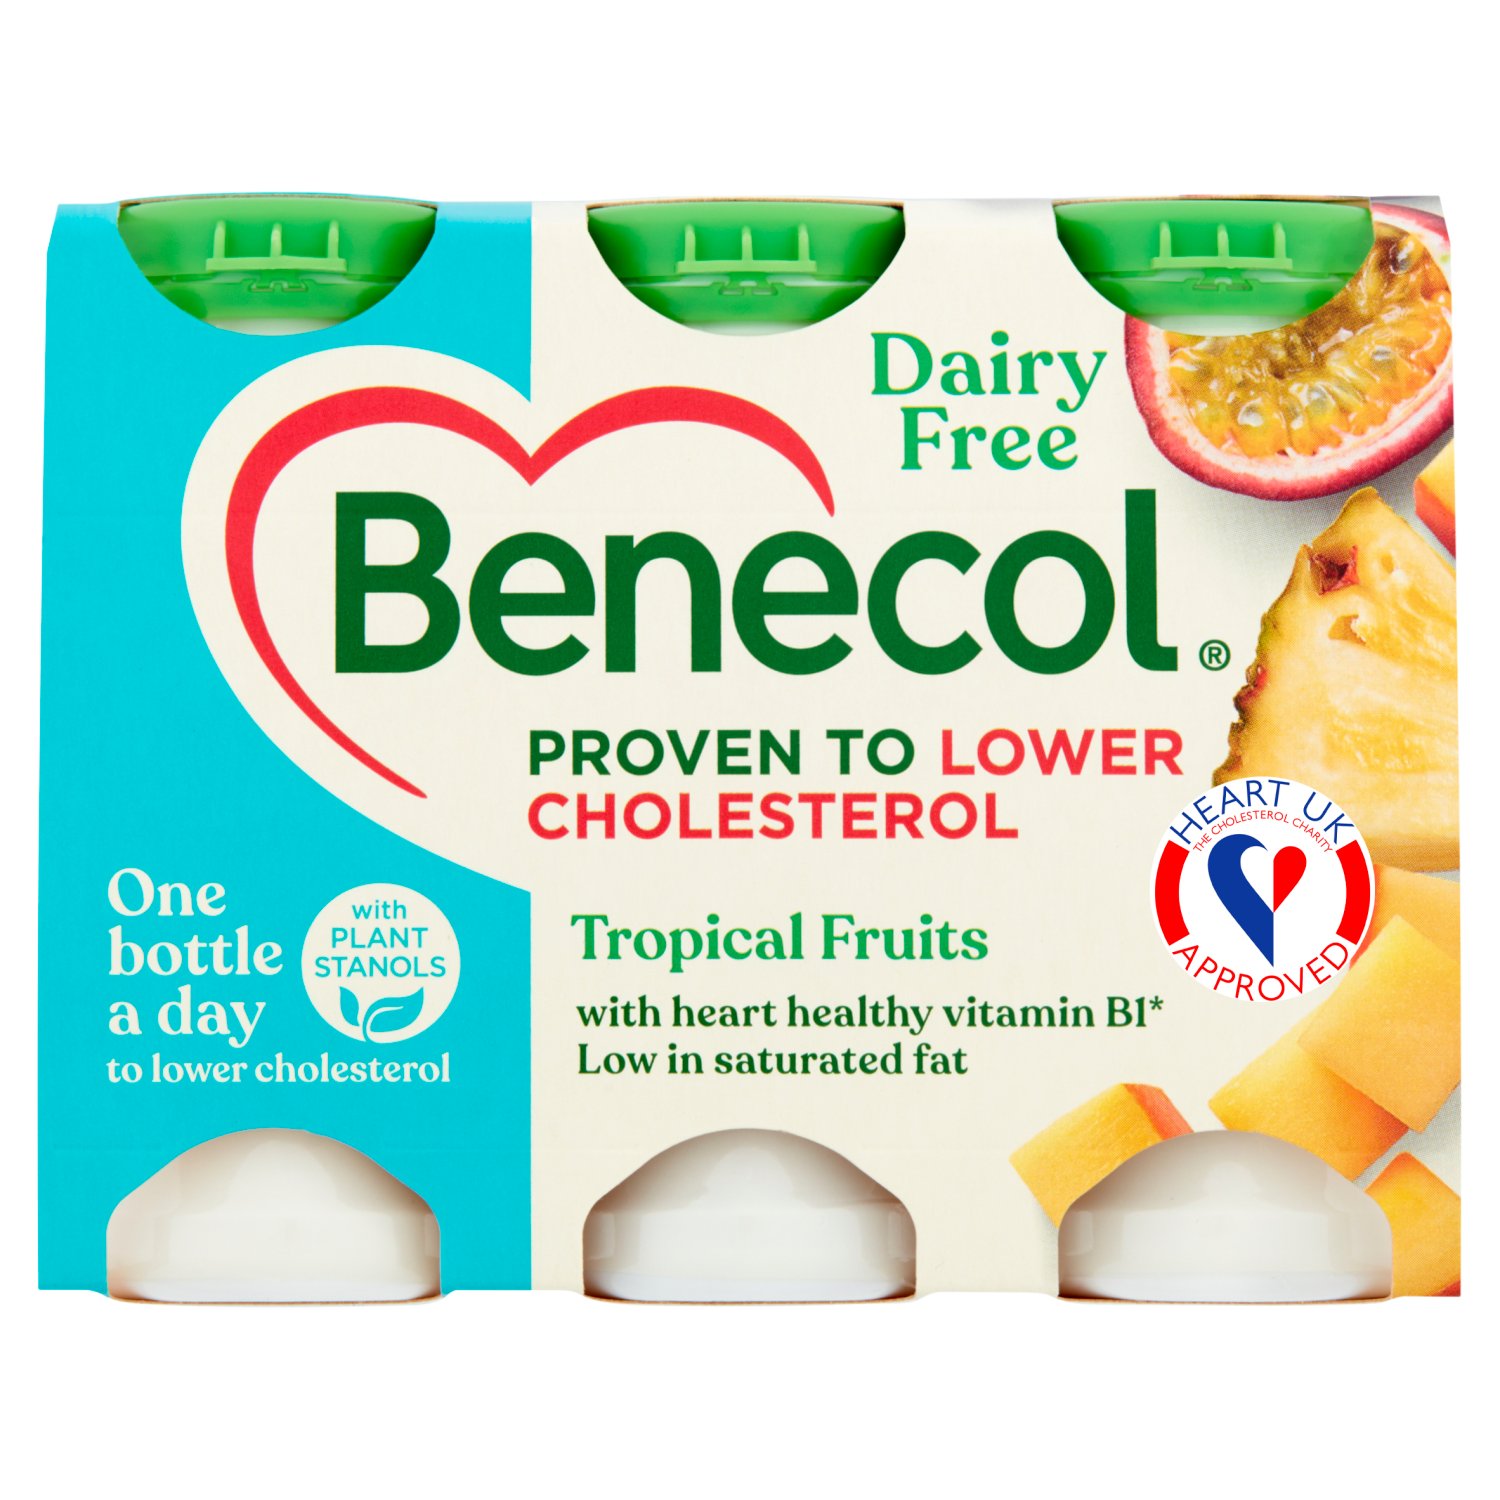 Benecol Dairy Free Tropical Yogurt Drink 6 Pack (405 g)